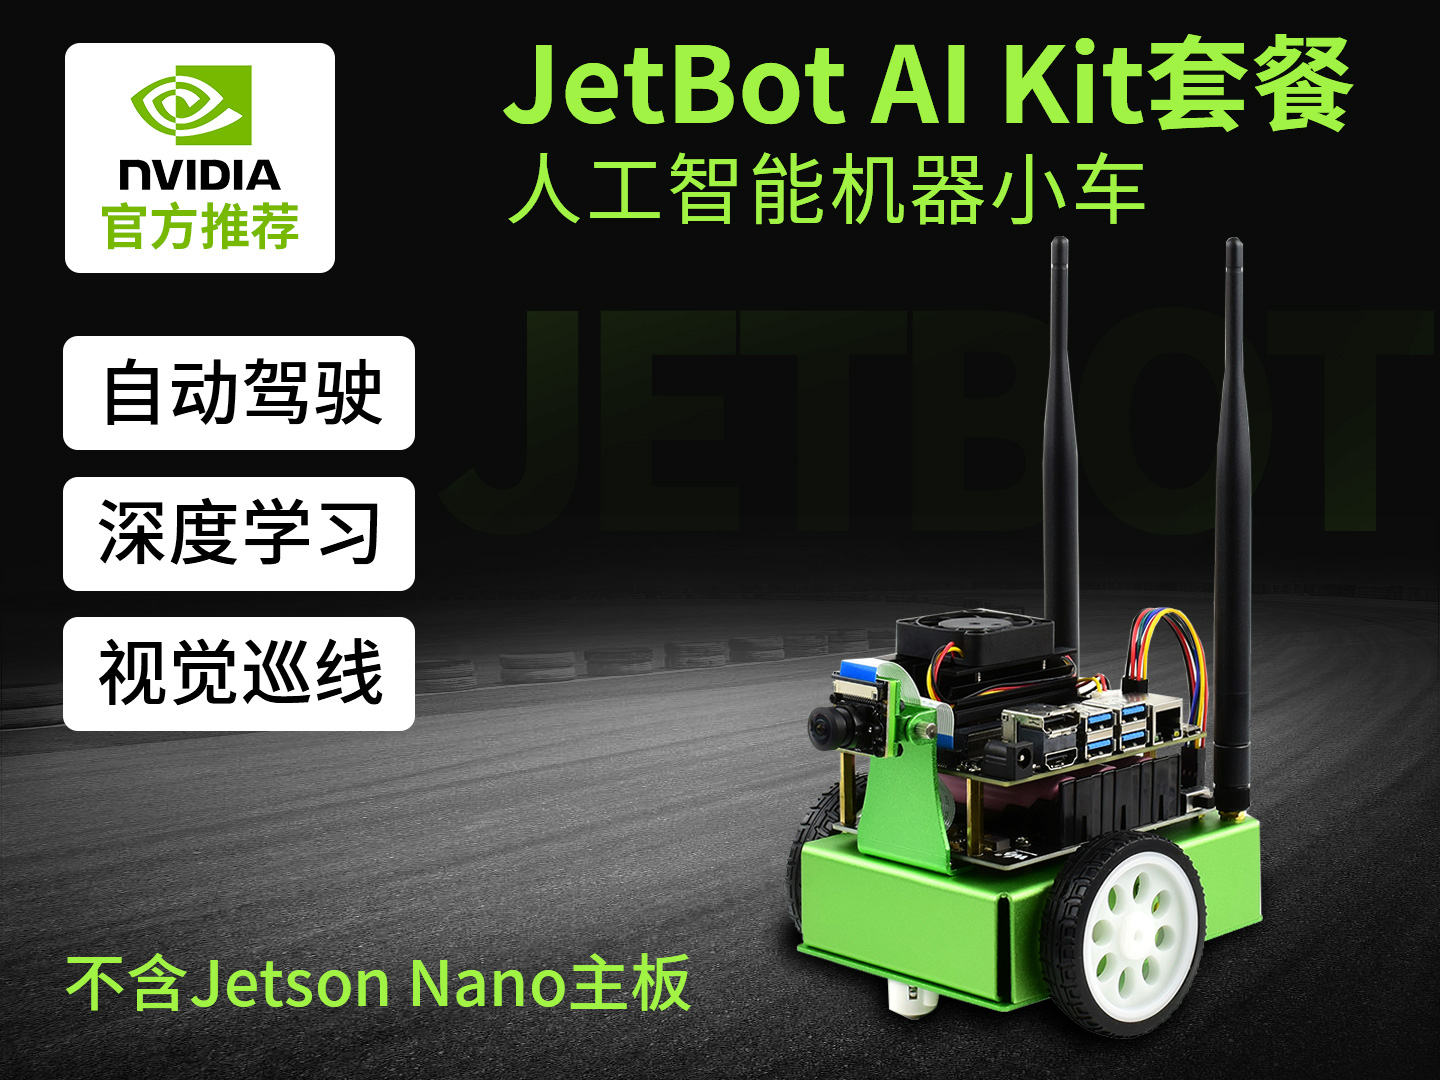 NVIDIA官方推荐JetBot AI Kit人工智能机器车 配件包(不含Jetson Nano)